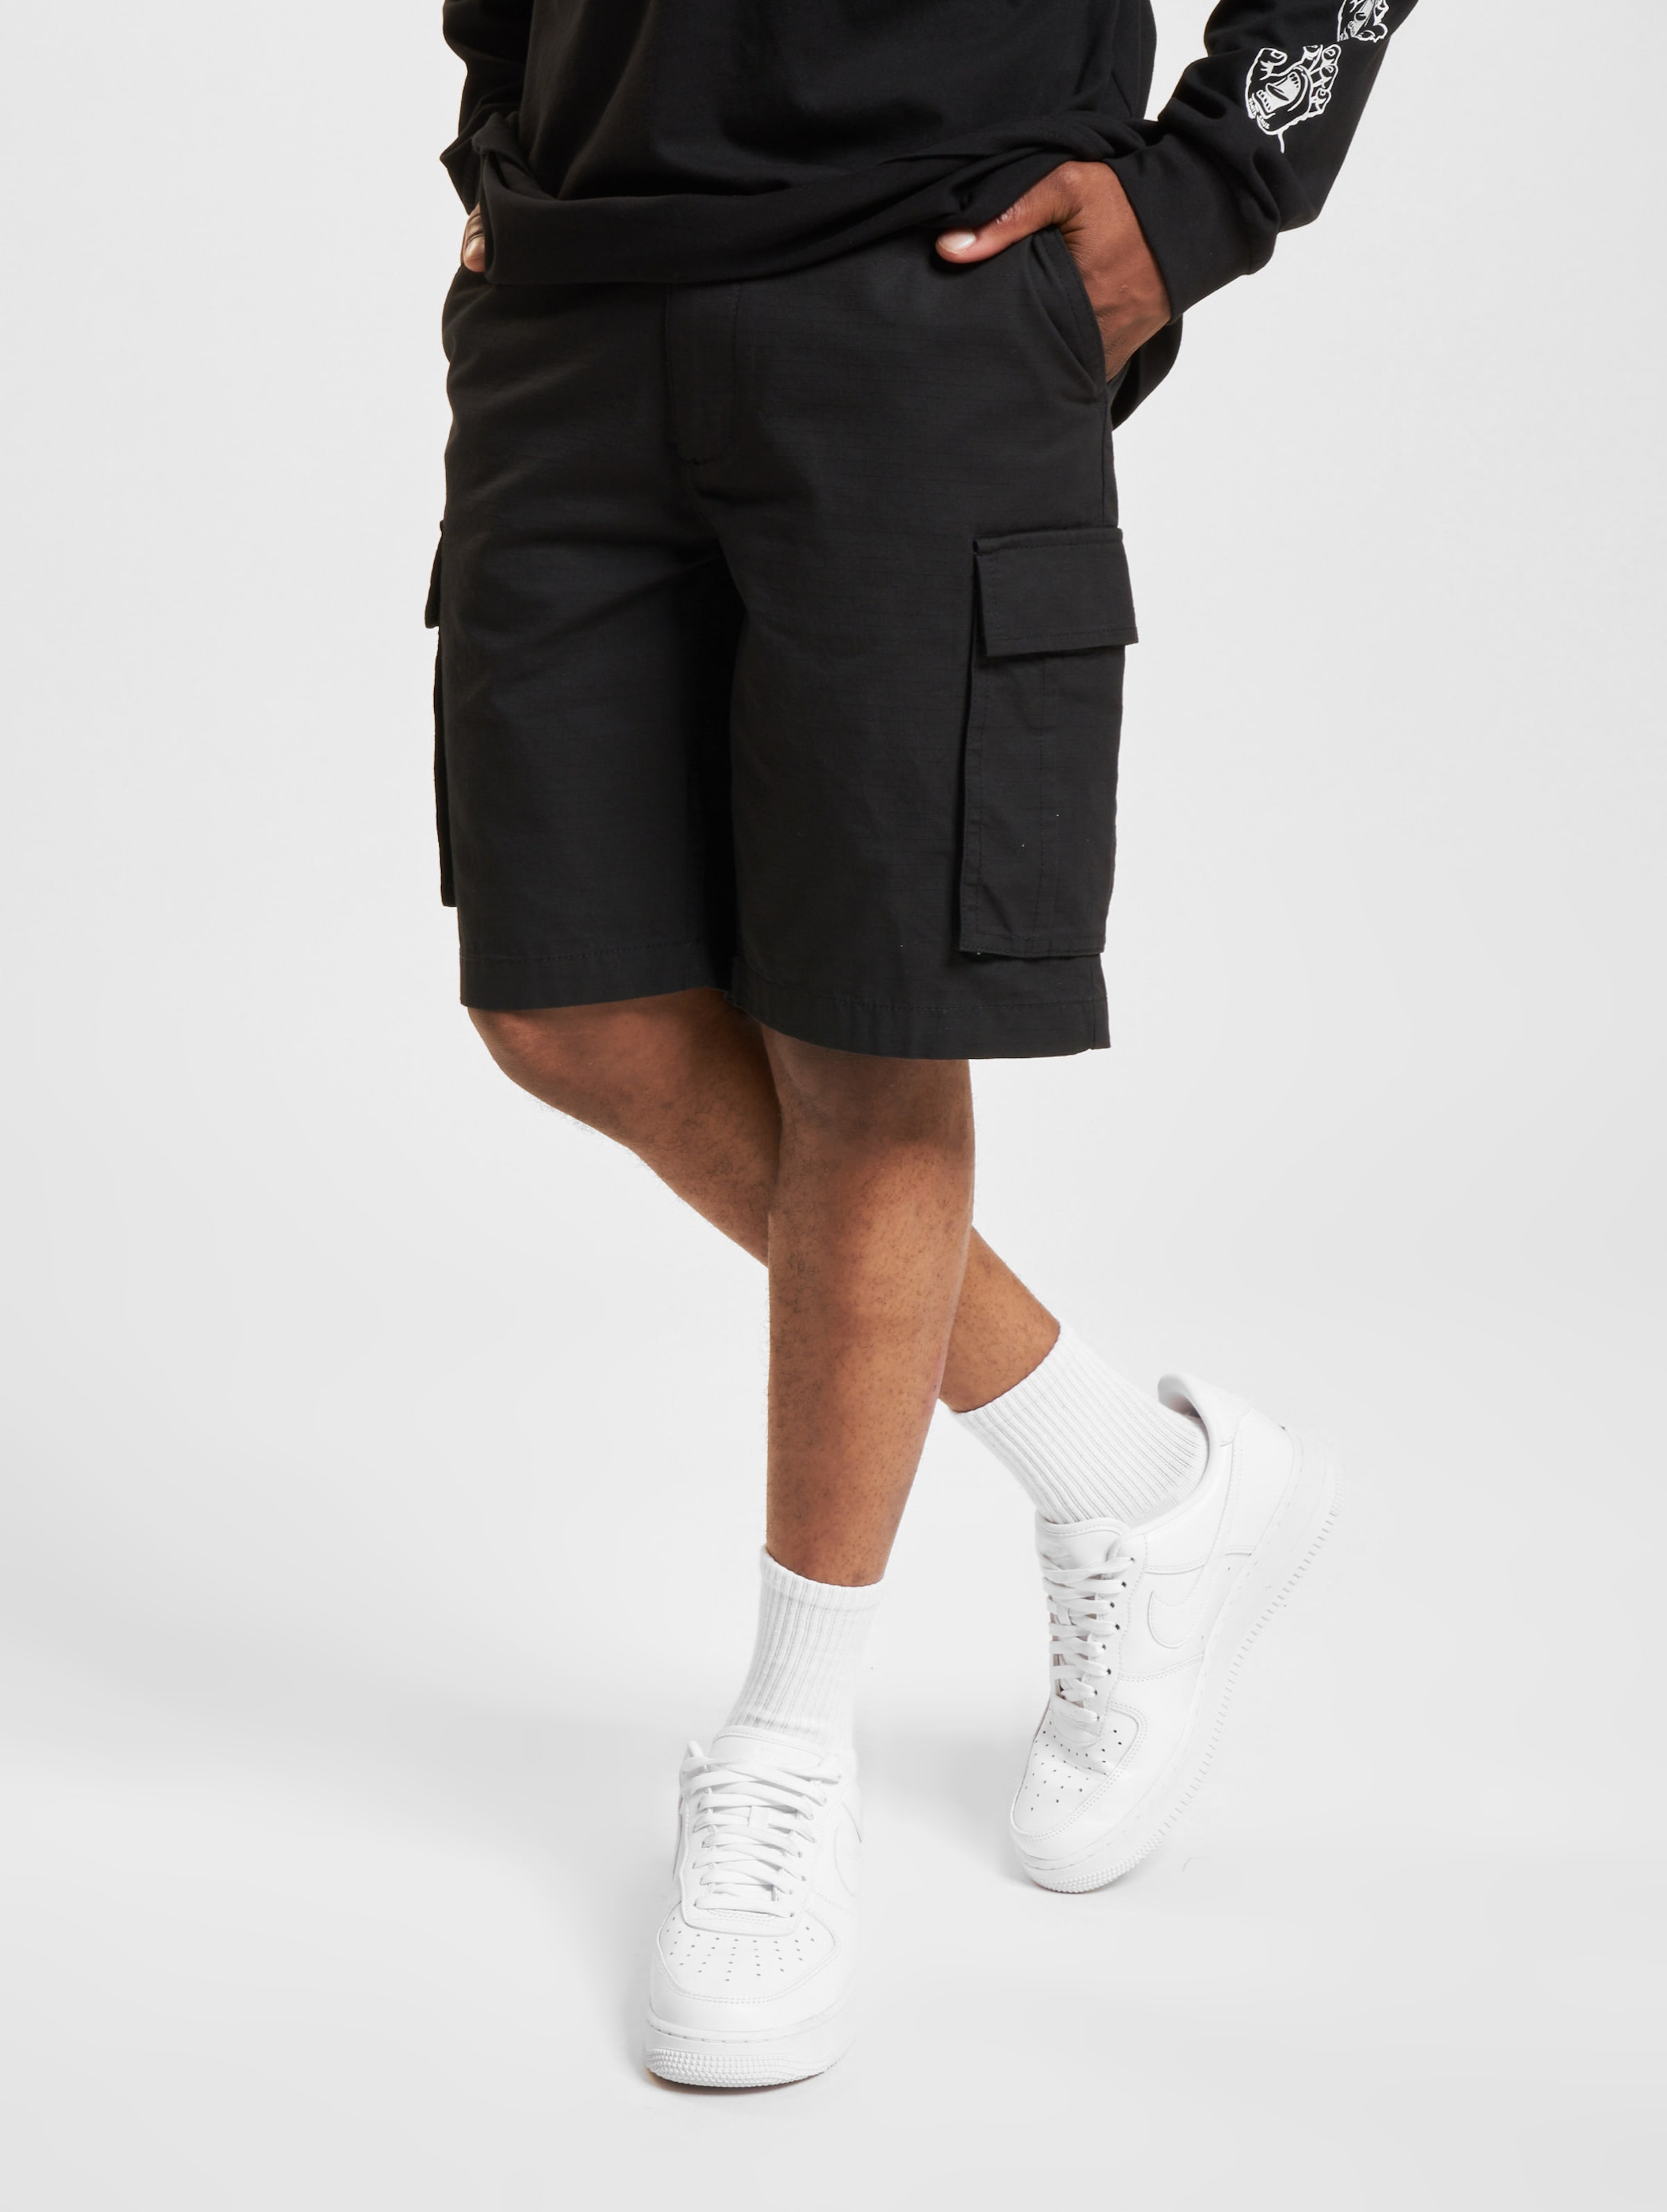 Santa Cruz Gauntlet Shorts Männer,Unisex op kleur zwart, Maat 28